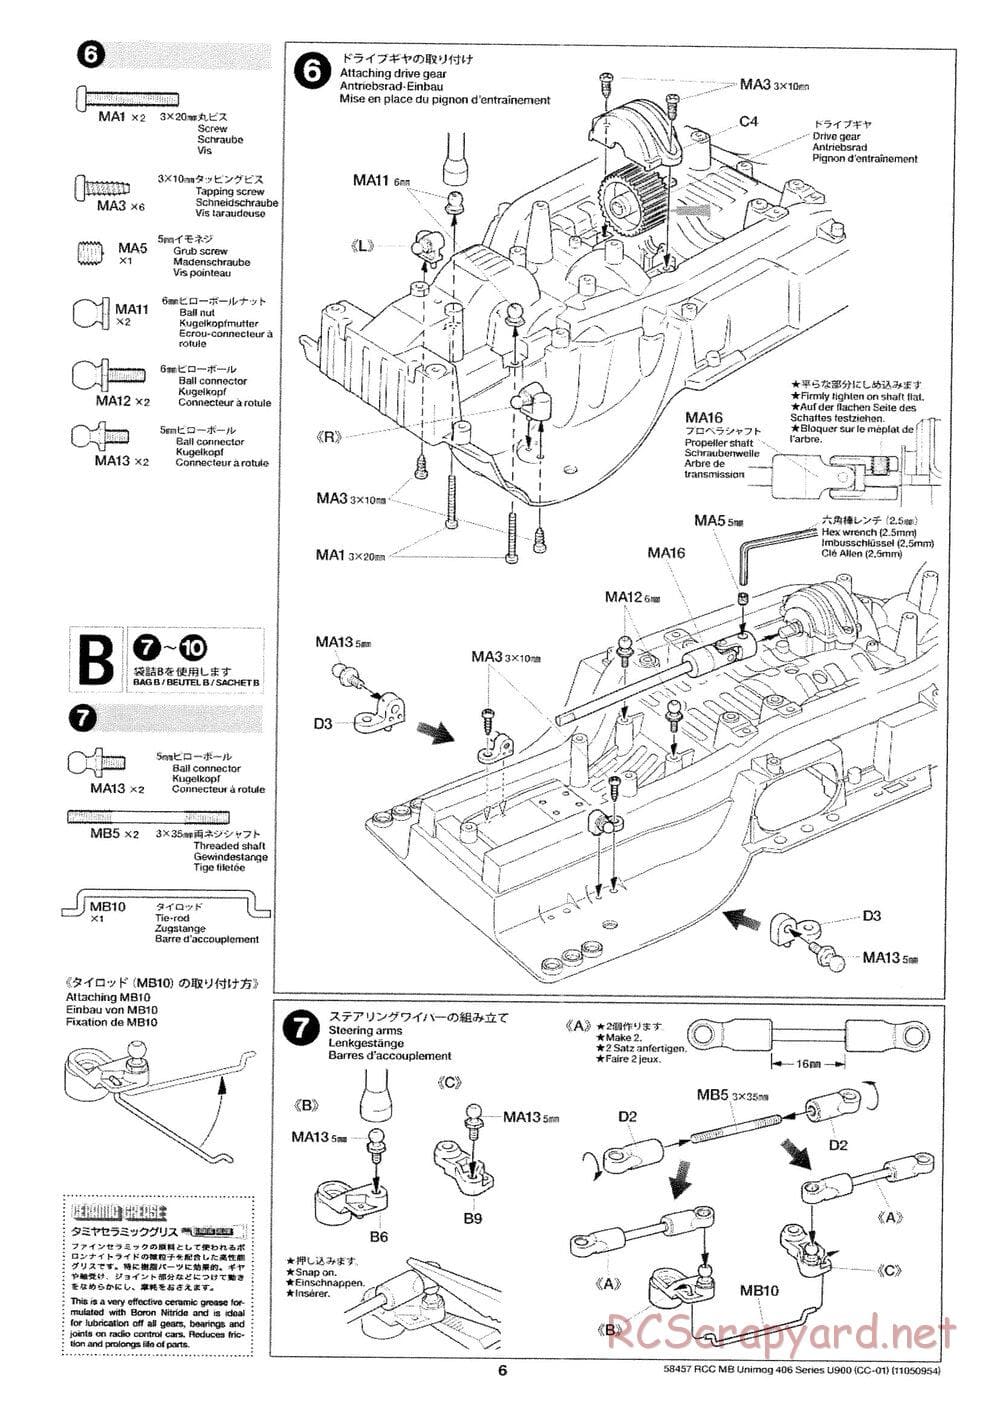 Tamiya - Mercedes-Benz Unimog 406 Series U900 - CC-01 Chassis - Manual - Page 6